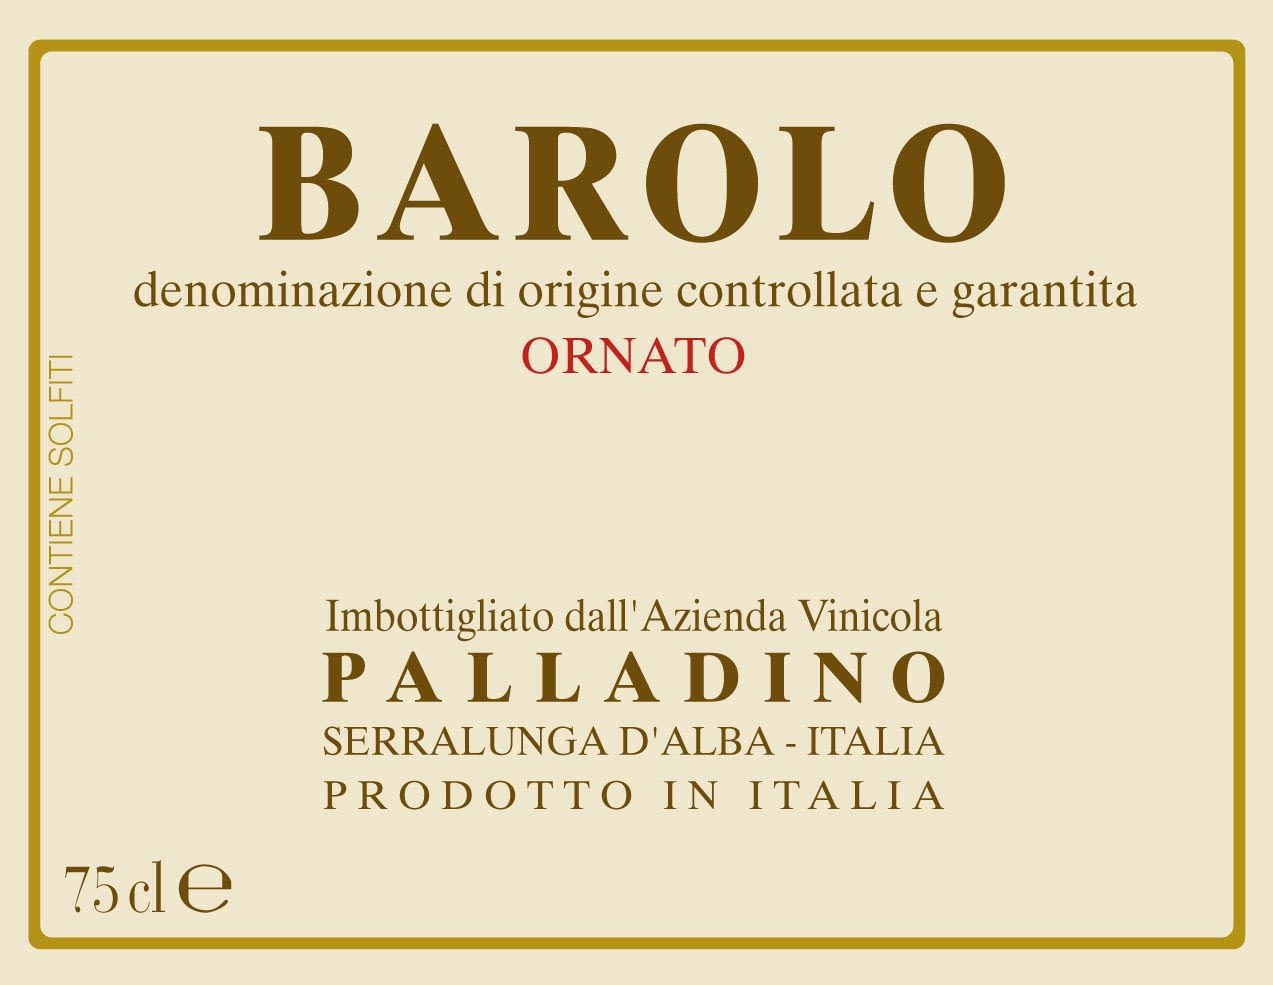 Palladino Barolo Ornato 2012